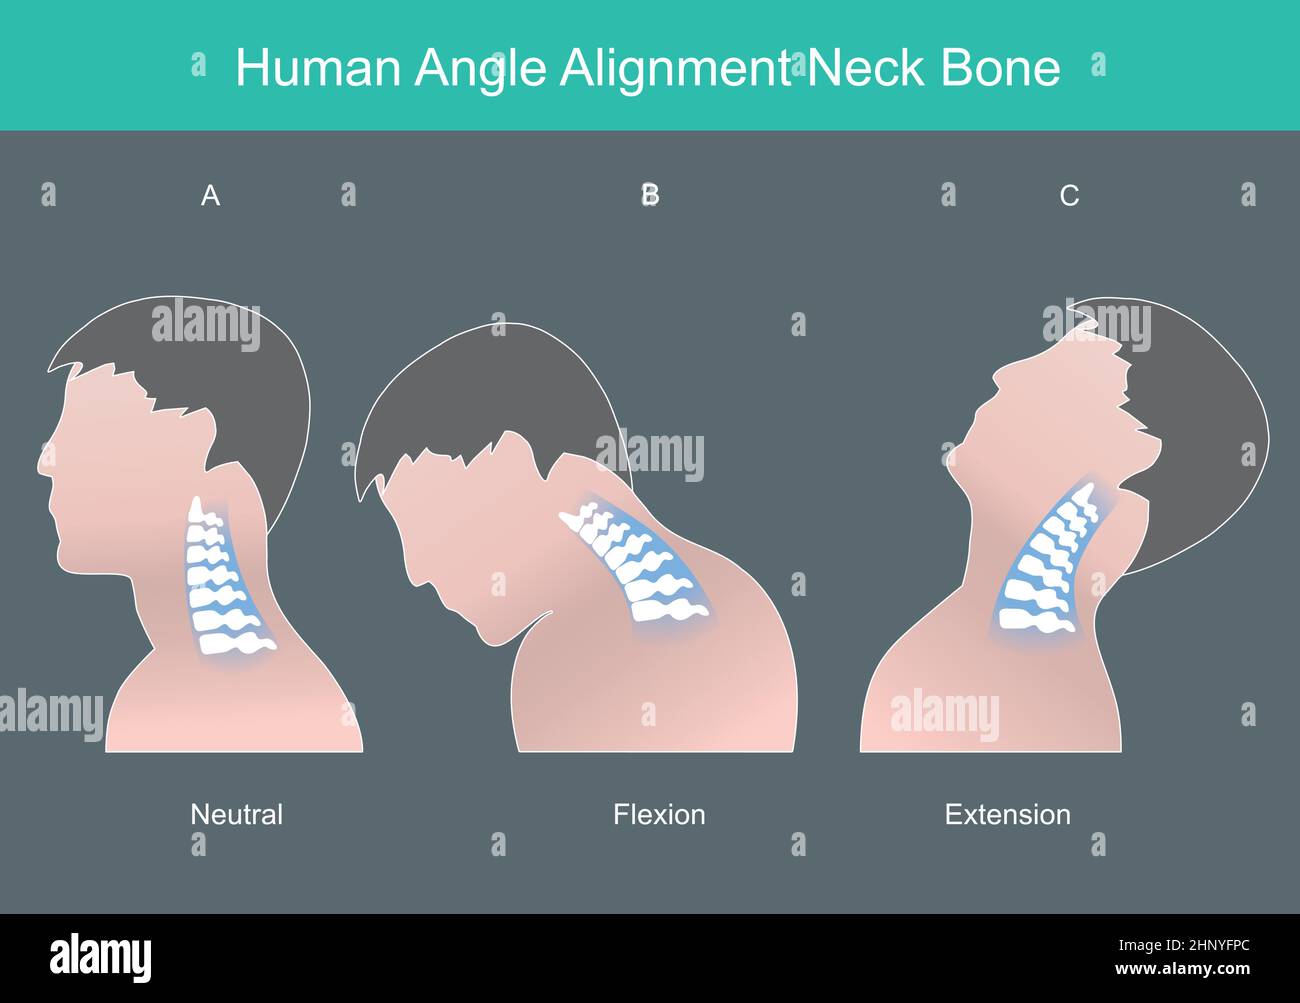 Human angle alignment neck bone. Human neck bone in correct angles. Illustration infographic. Stock Vector